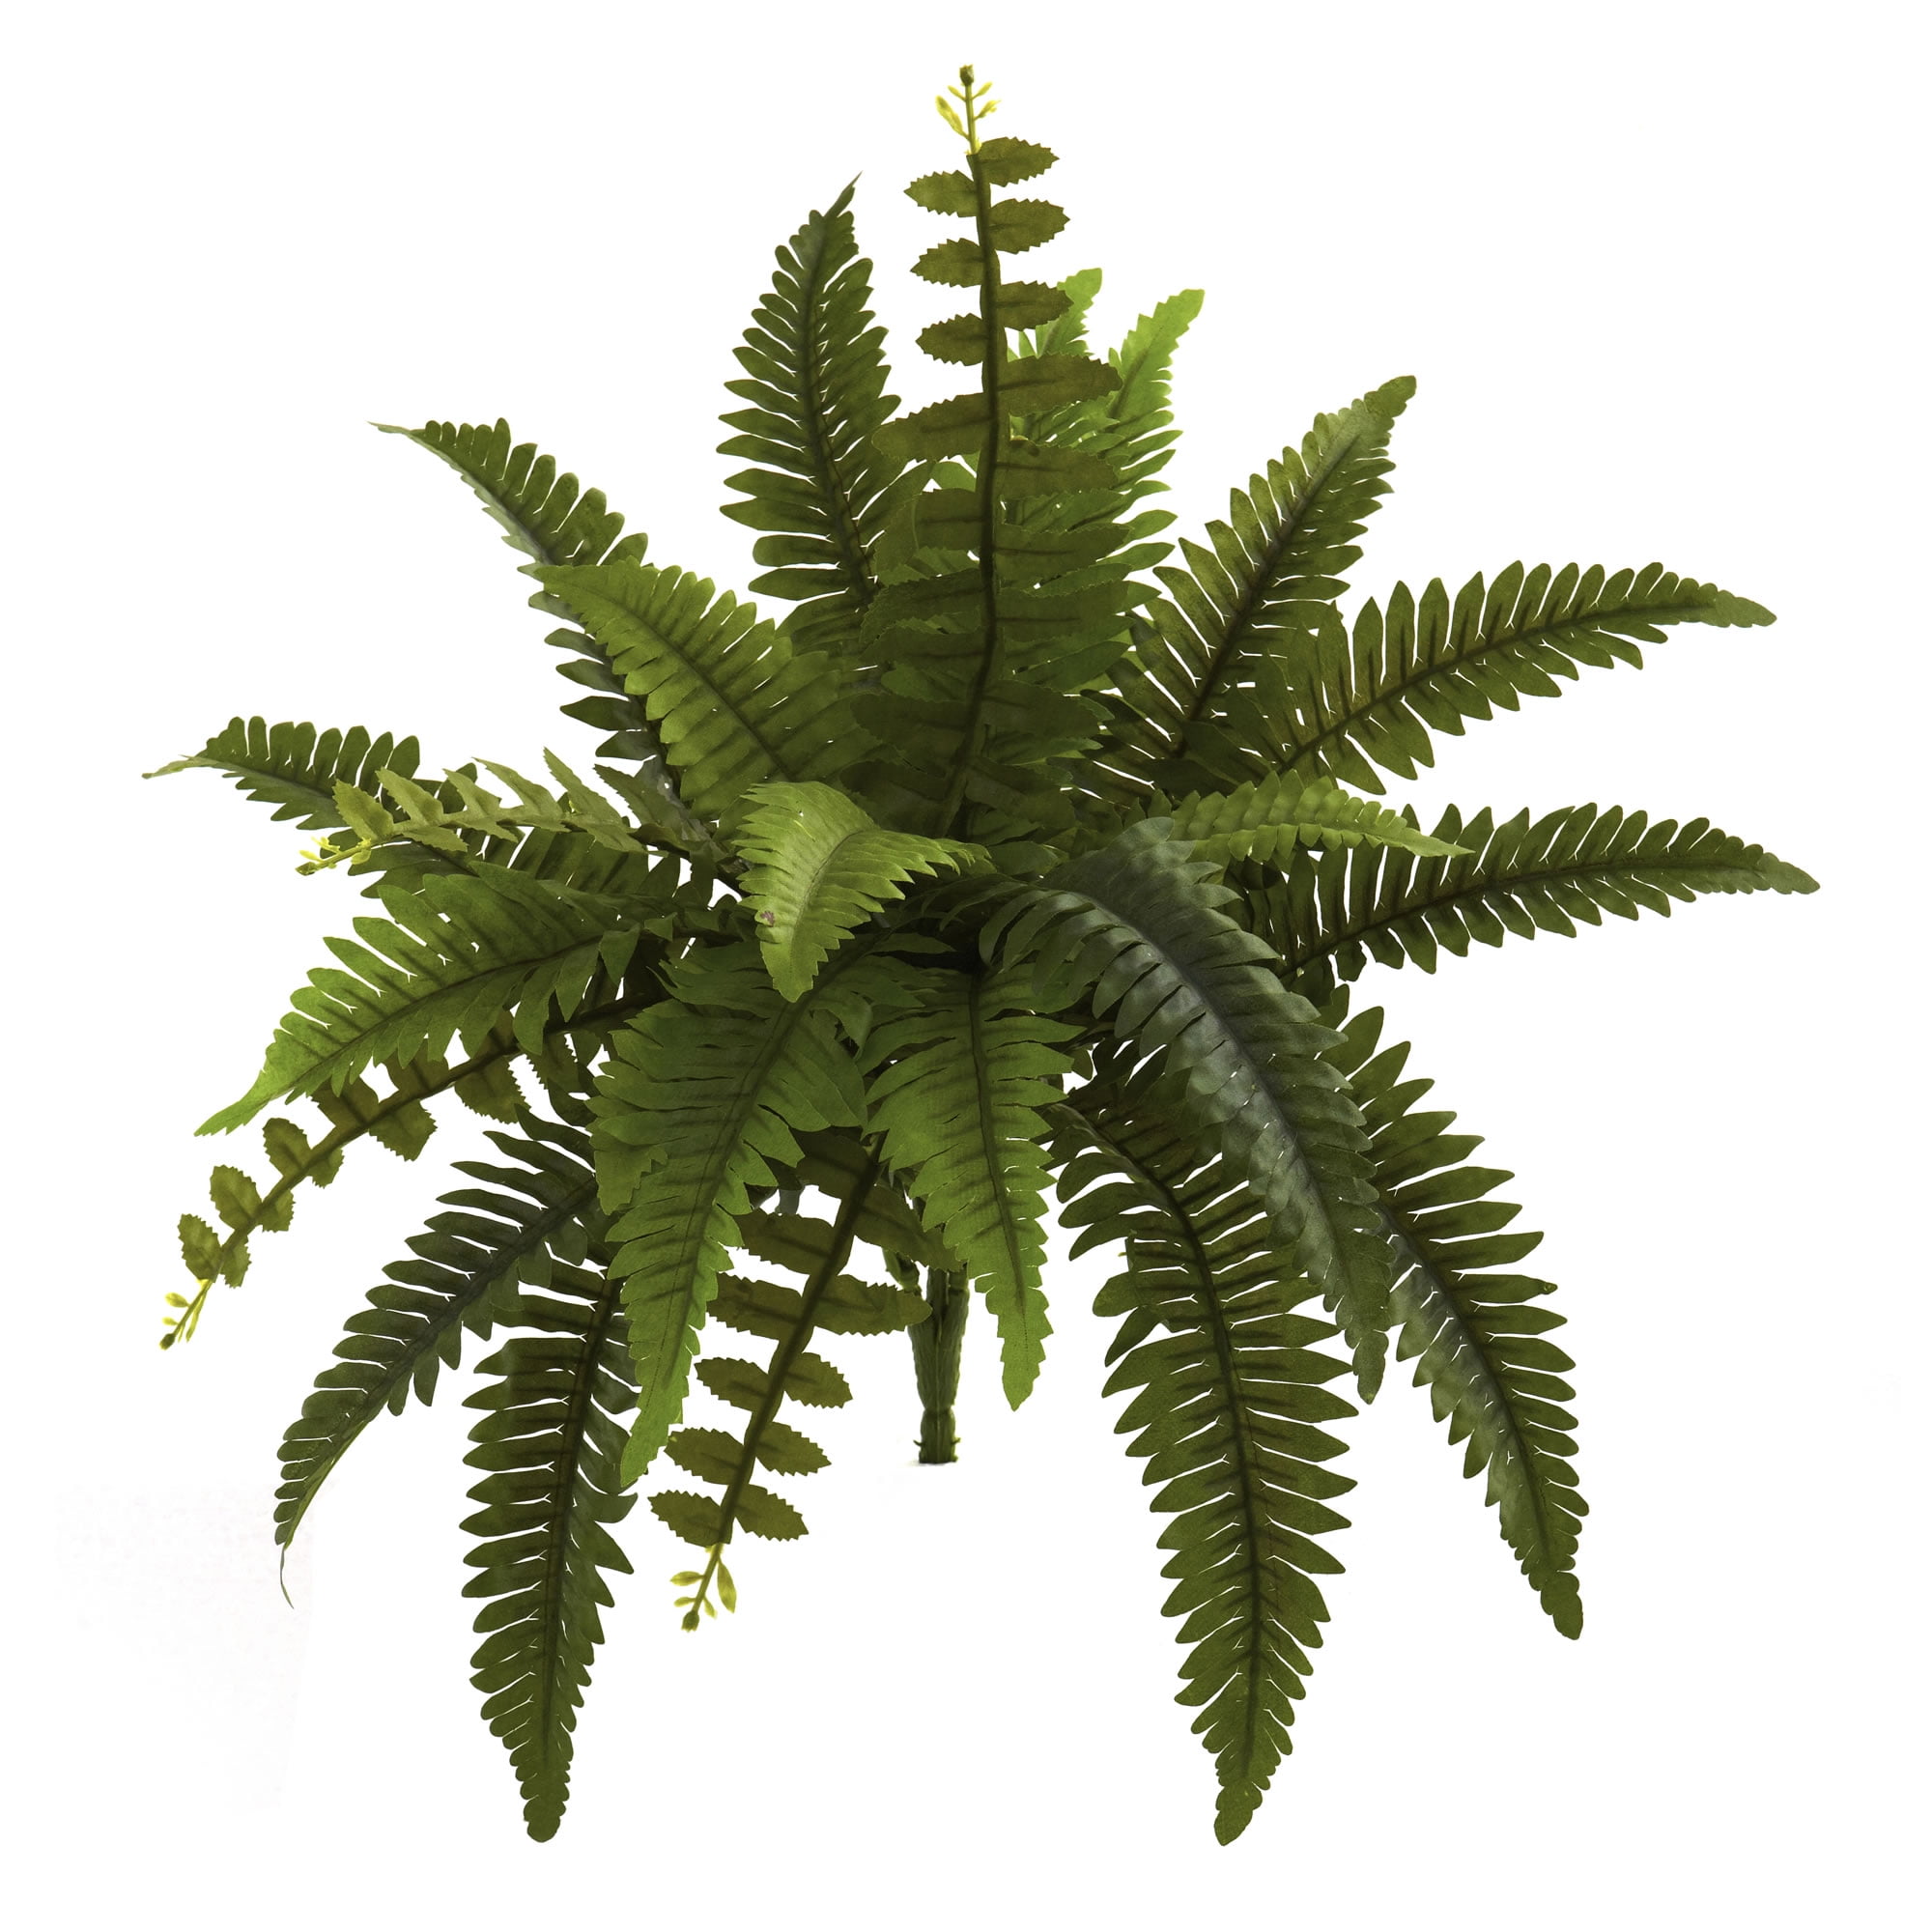 Details about   Artificial Plants Hippocampus Grass Plastic Ferns Green Leaves Flowers 1 Bouquet